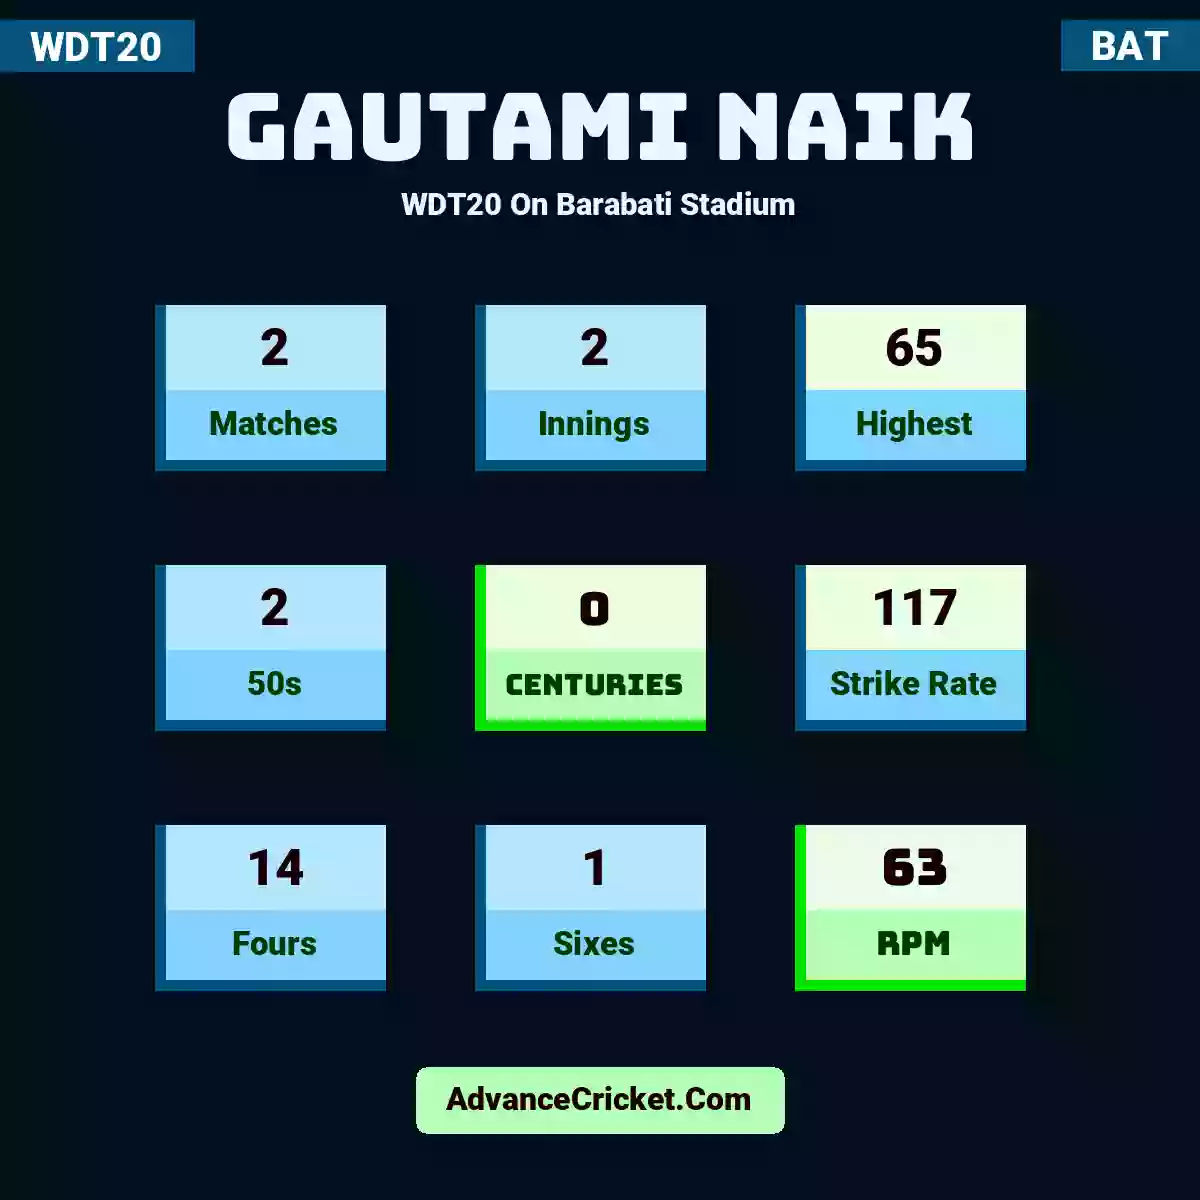 Gautami Naik WDT20  On Barabati Stadium, Gautami Naik played 2 matches, scored 65 runs as highest, 2 half-centuries, and 0 centuries, with a strike rate of 117. G.Naik hit 14 fours and 1 sixes, with an RPM of 63.